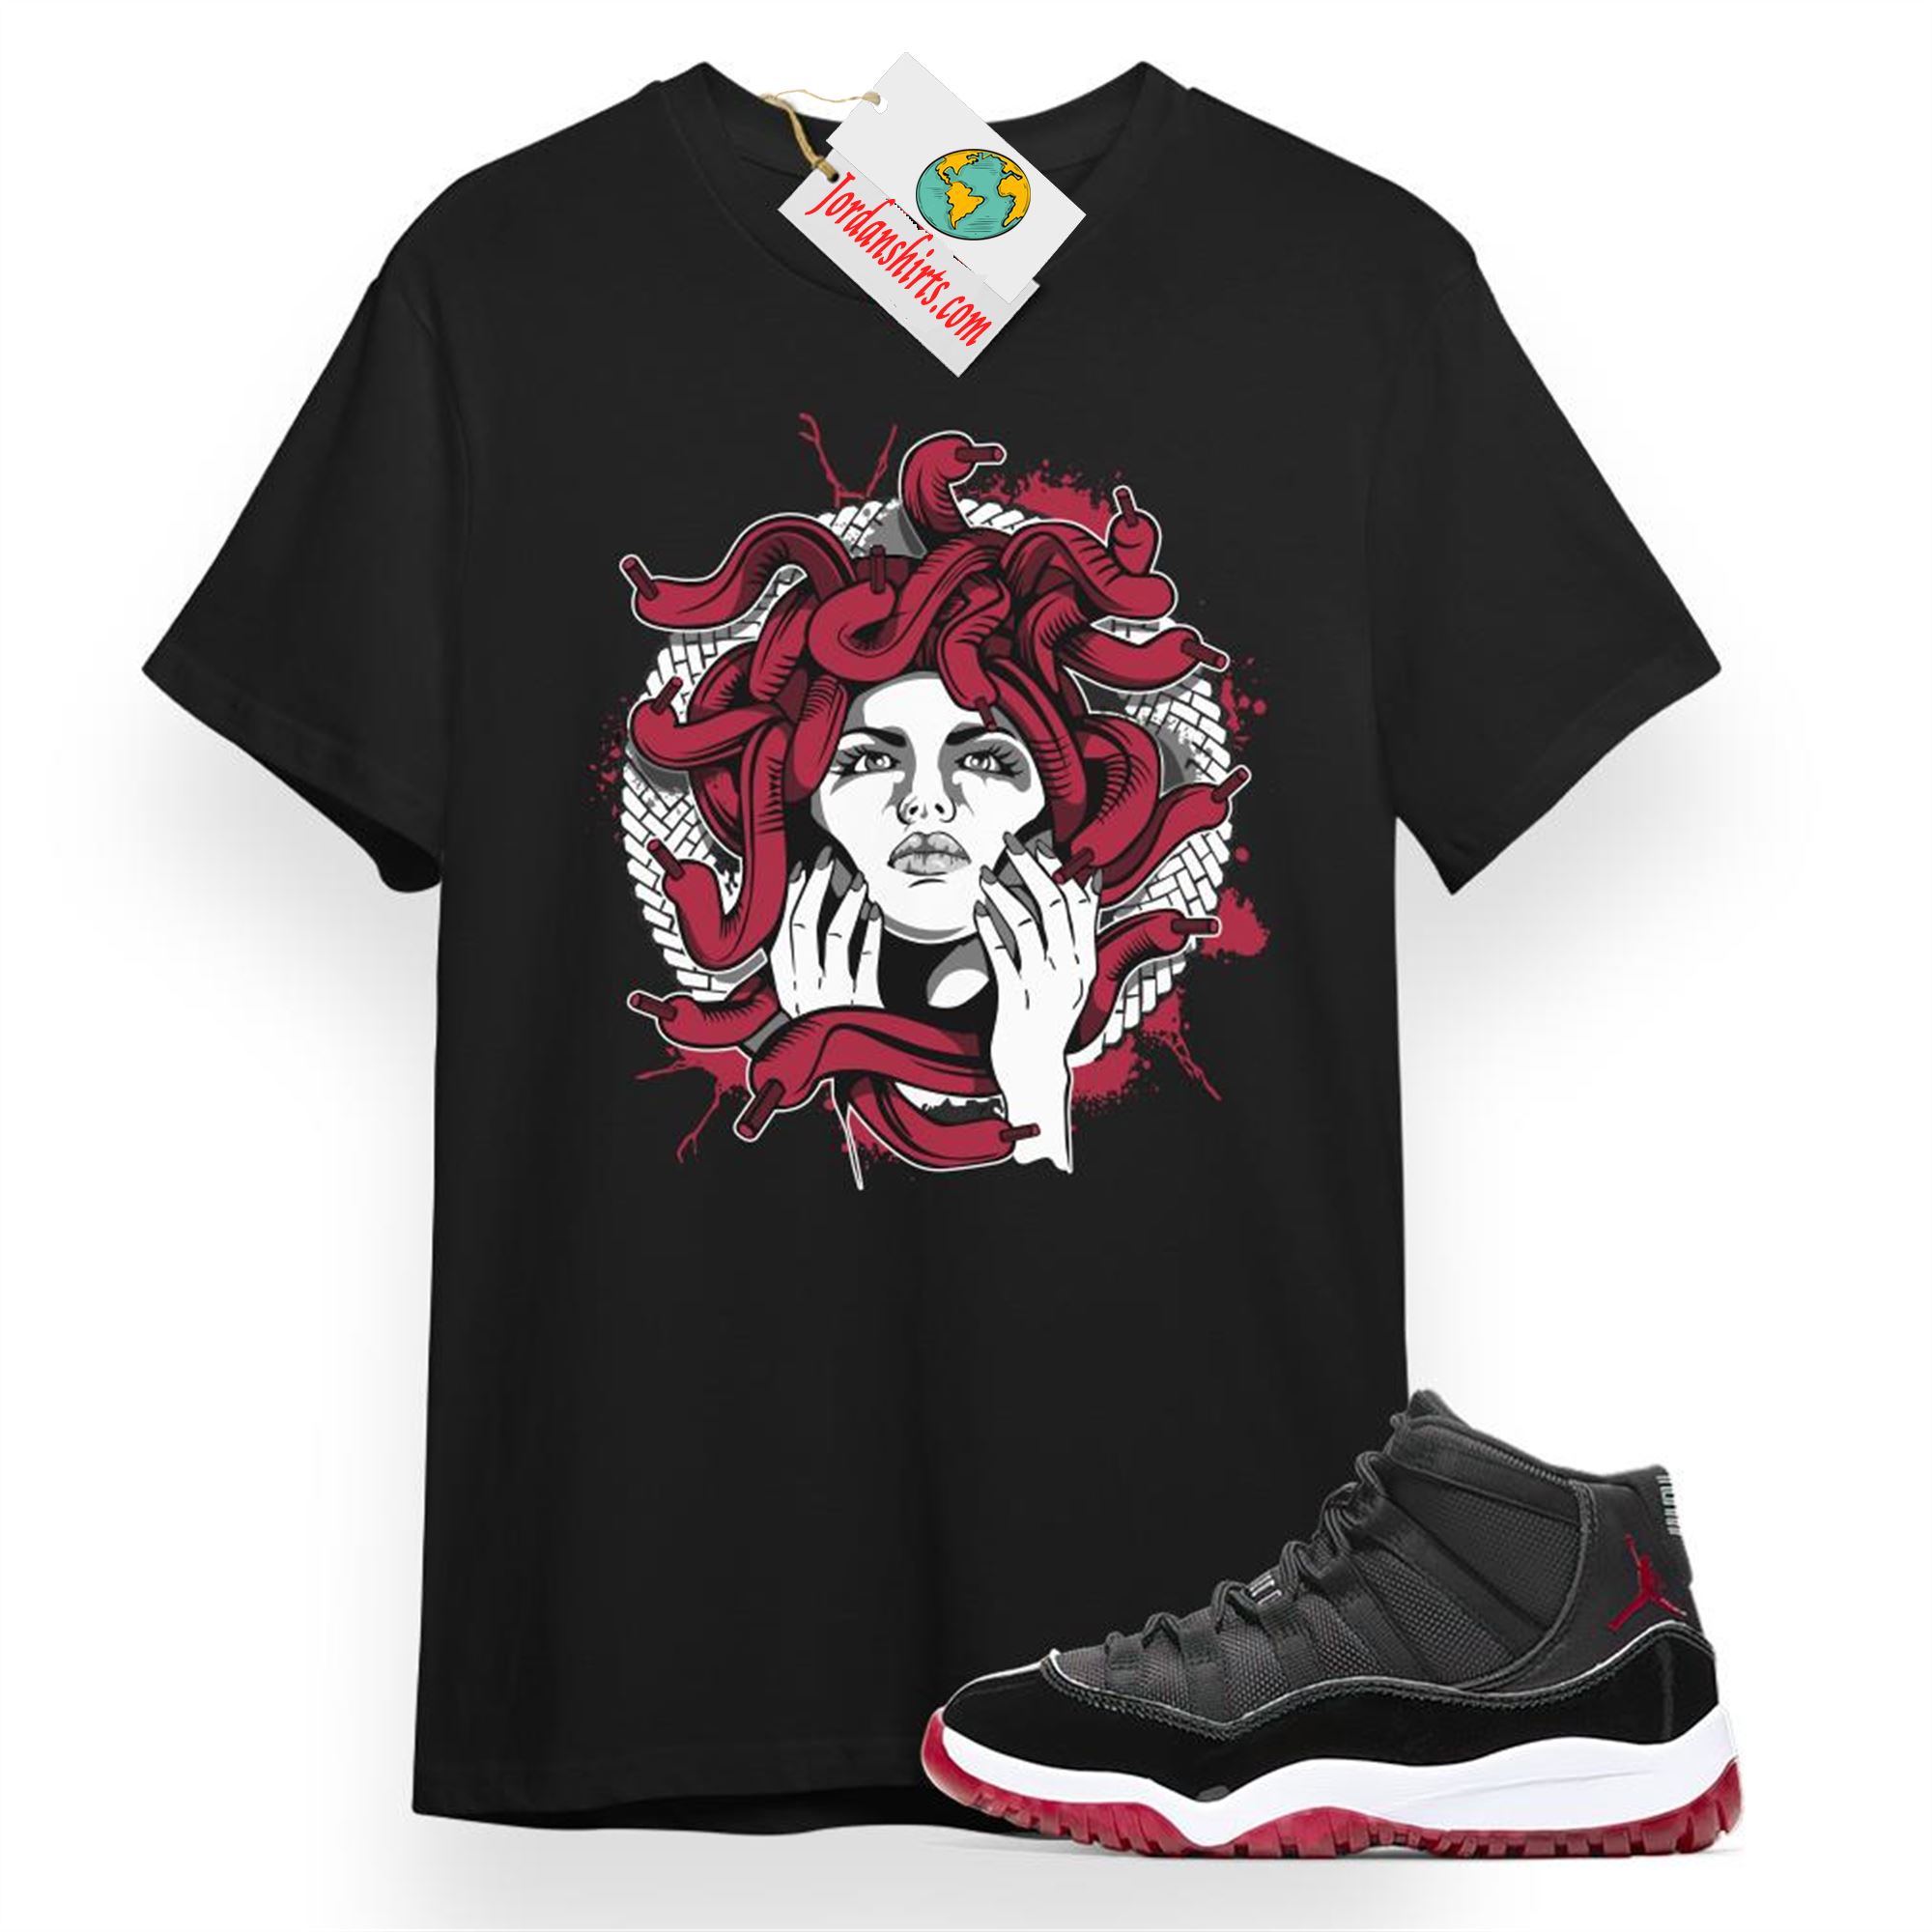 Jordan 11 Shirt, Medusa Black T-shirt Air Jordan 11 Bred 11s Full Size Up To 5xl